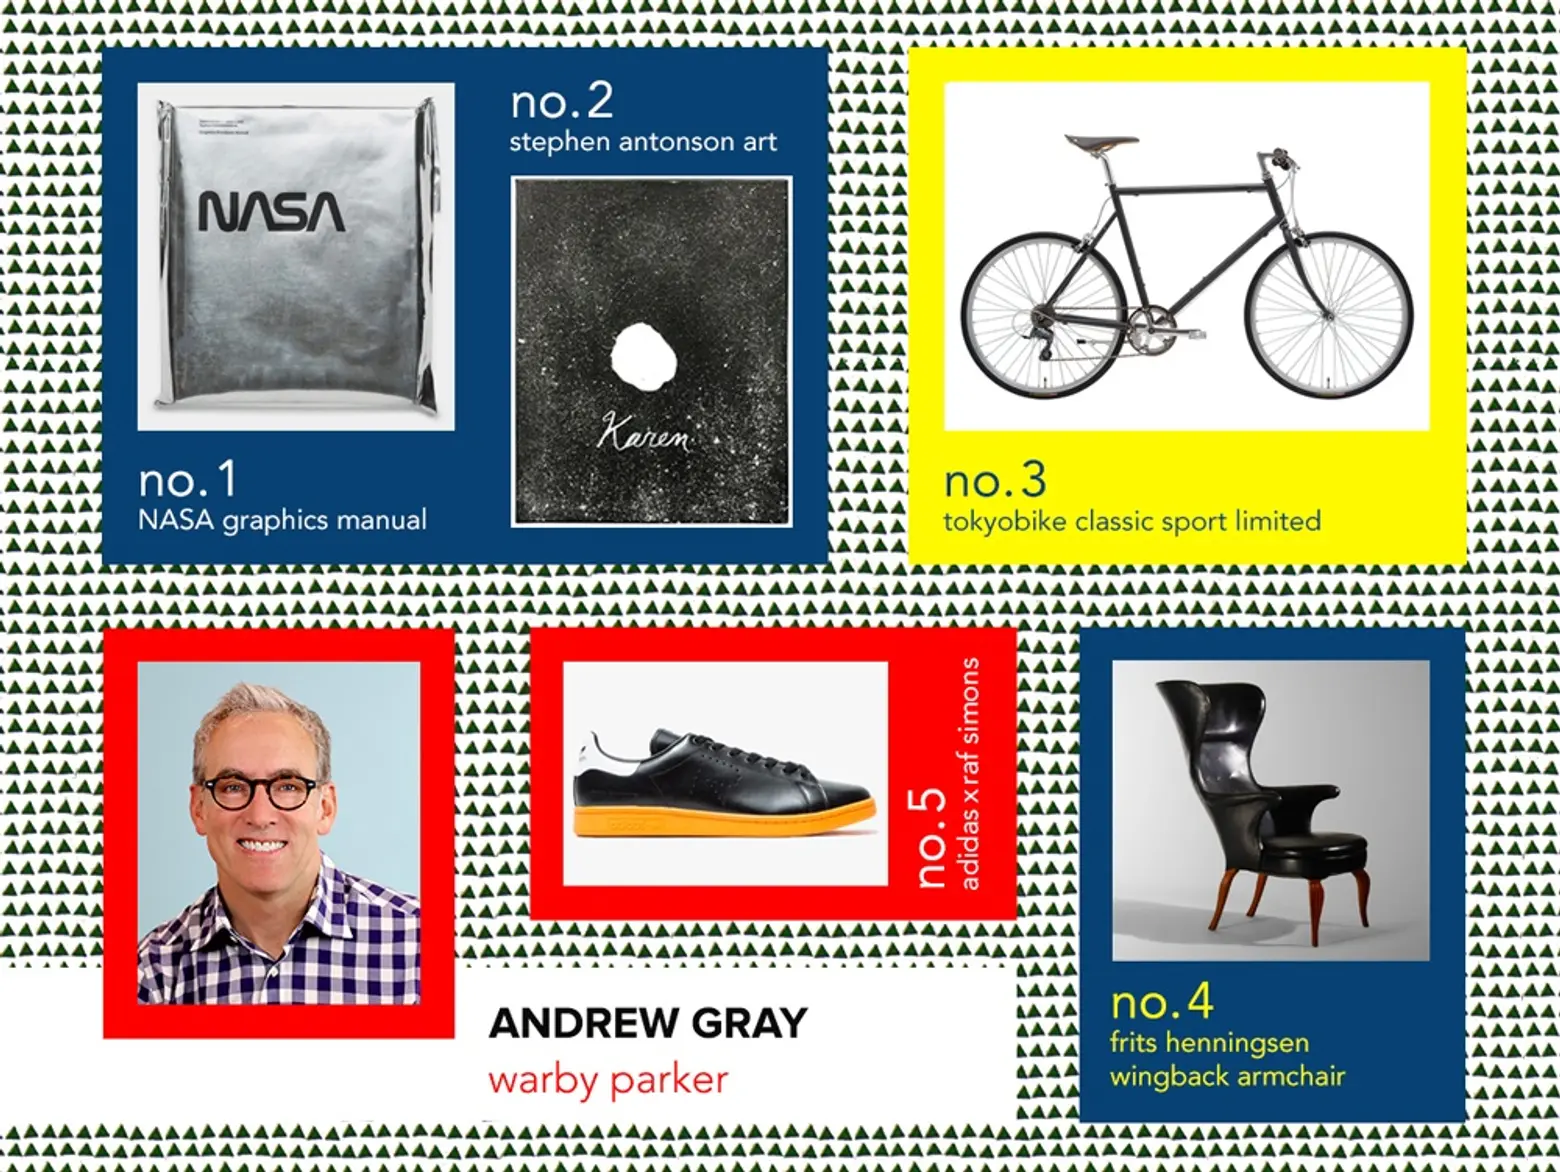 andy gray, andrew gray, andy gray designer, 6sqft designer gift guide